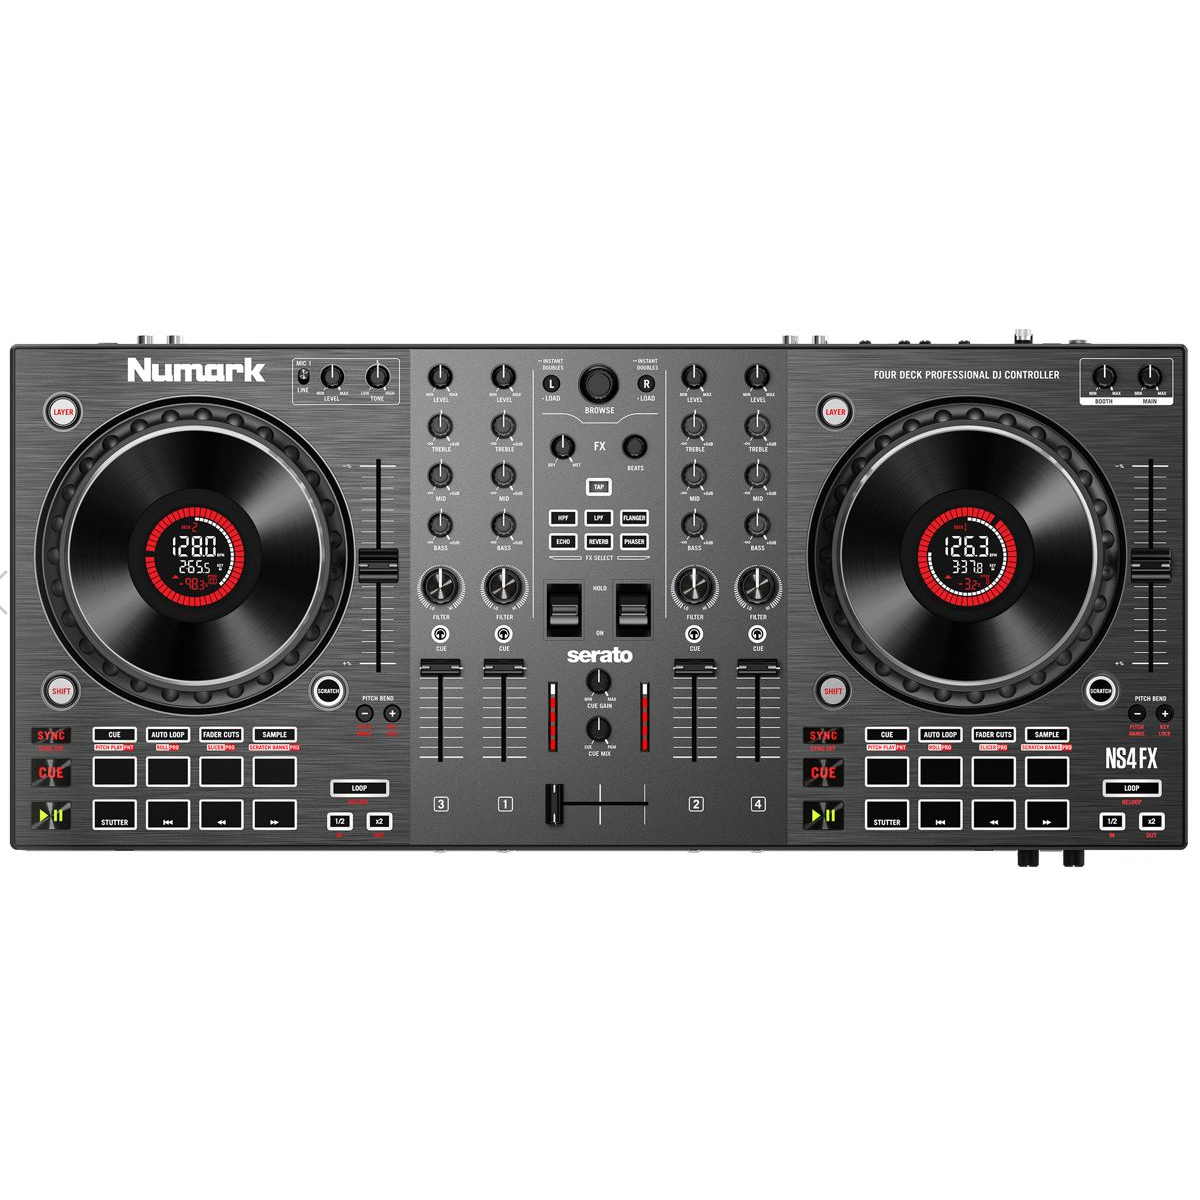 Contrôleurs DJ USB - Numark - NS4FX